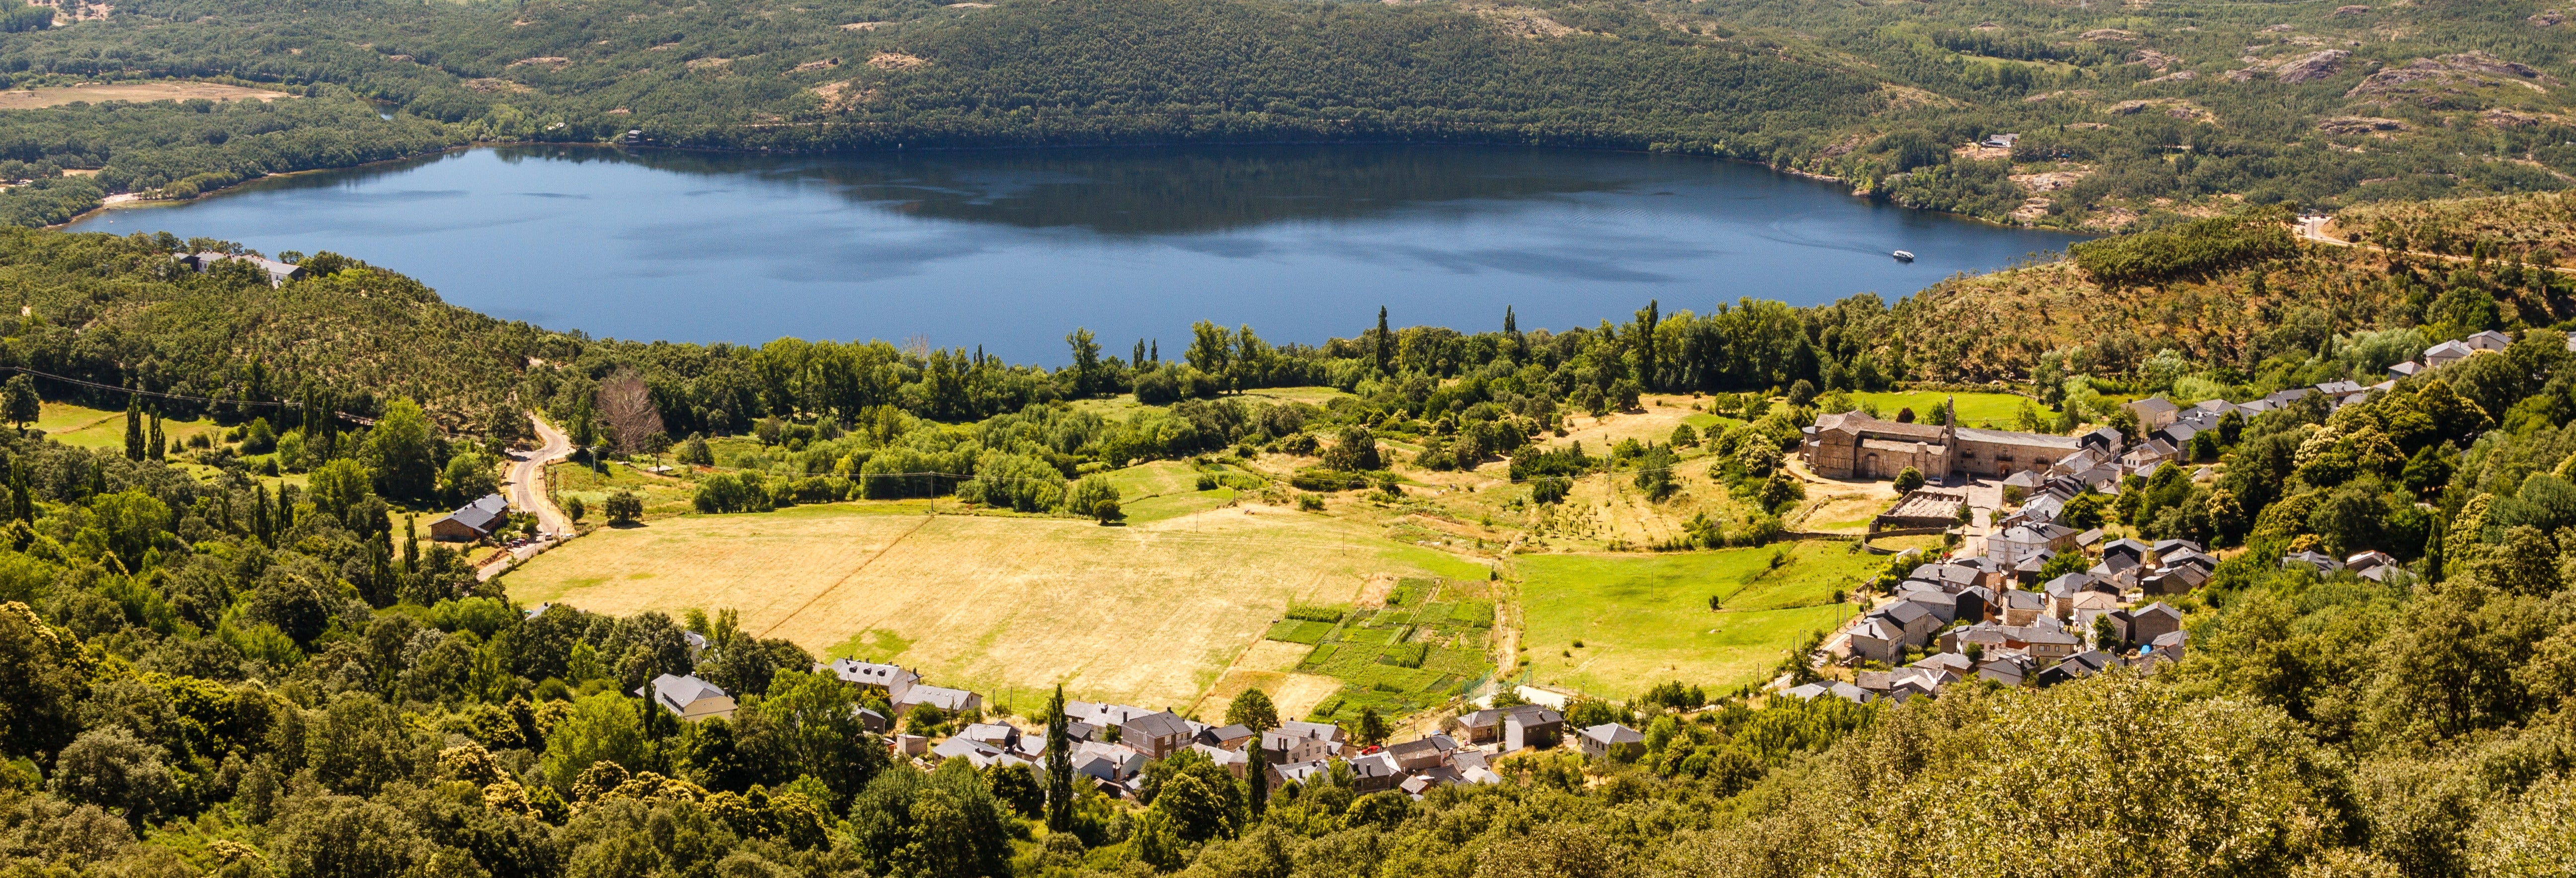 Parque Natural del Lago de Sanabria